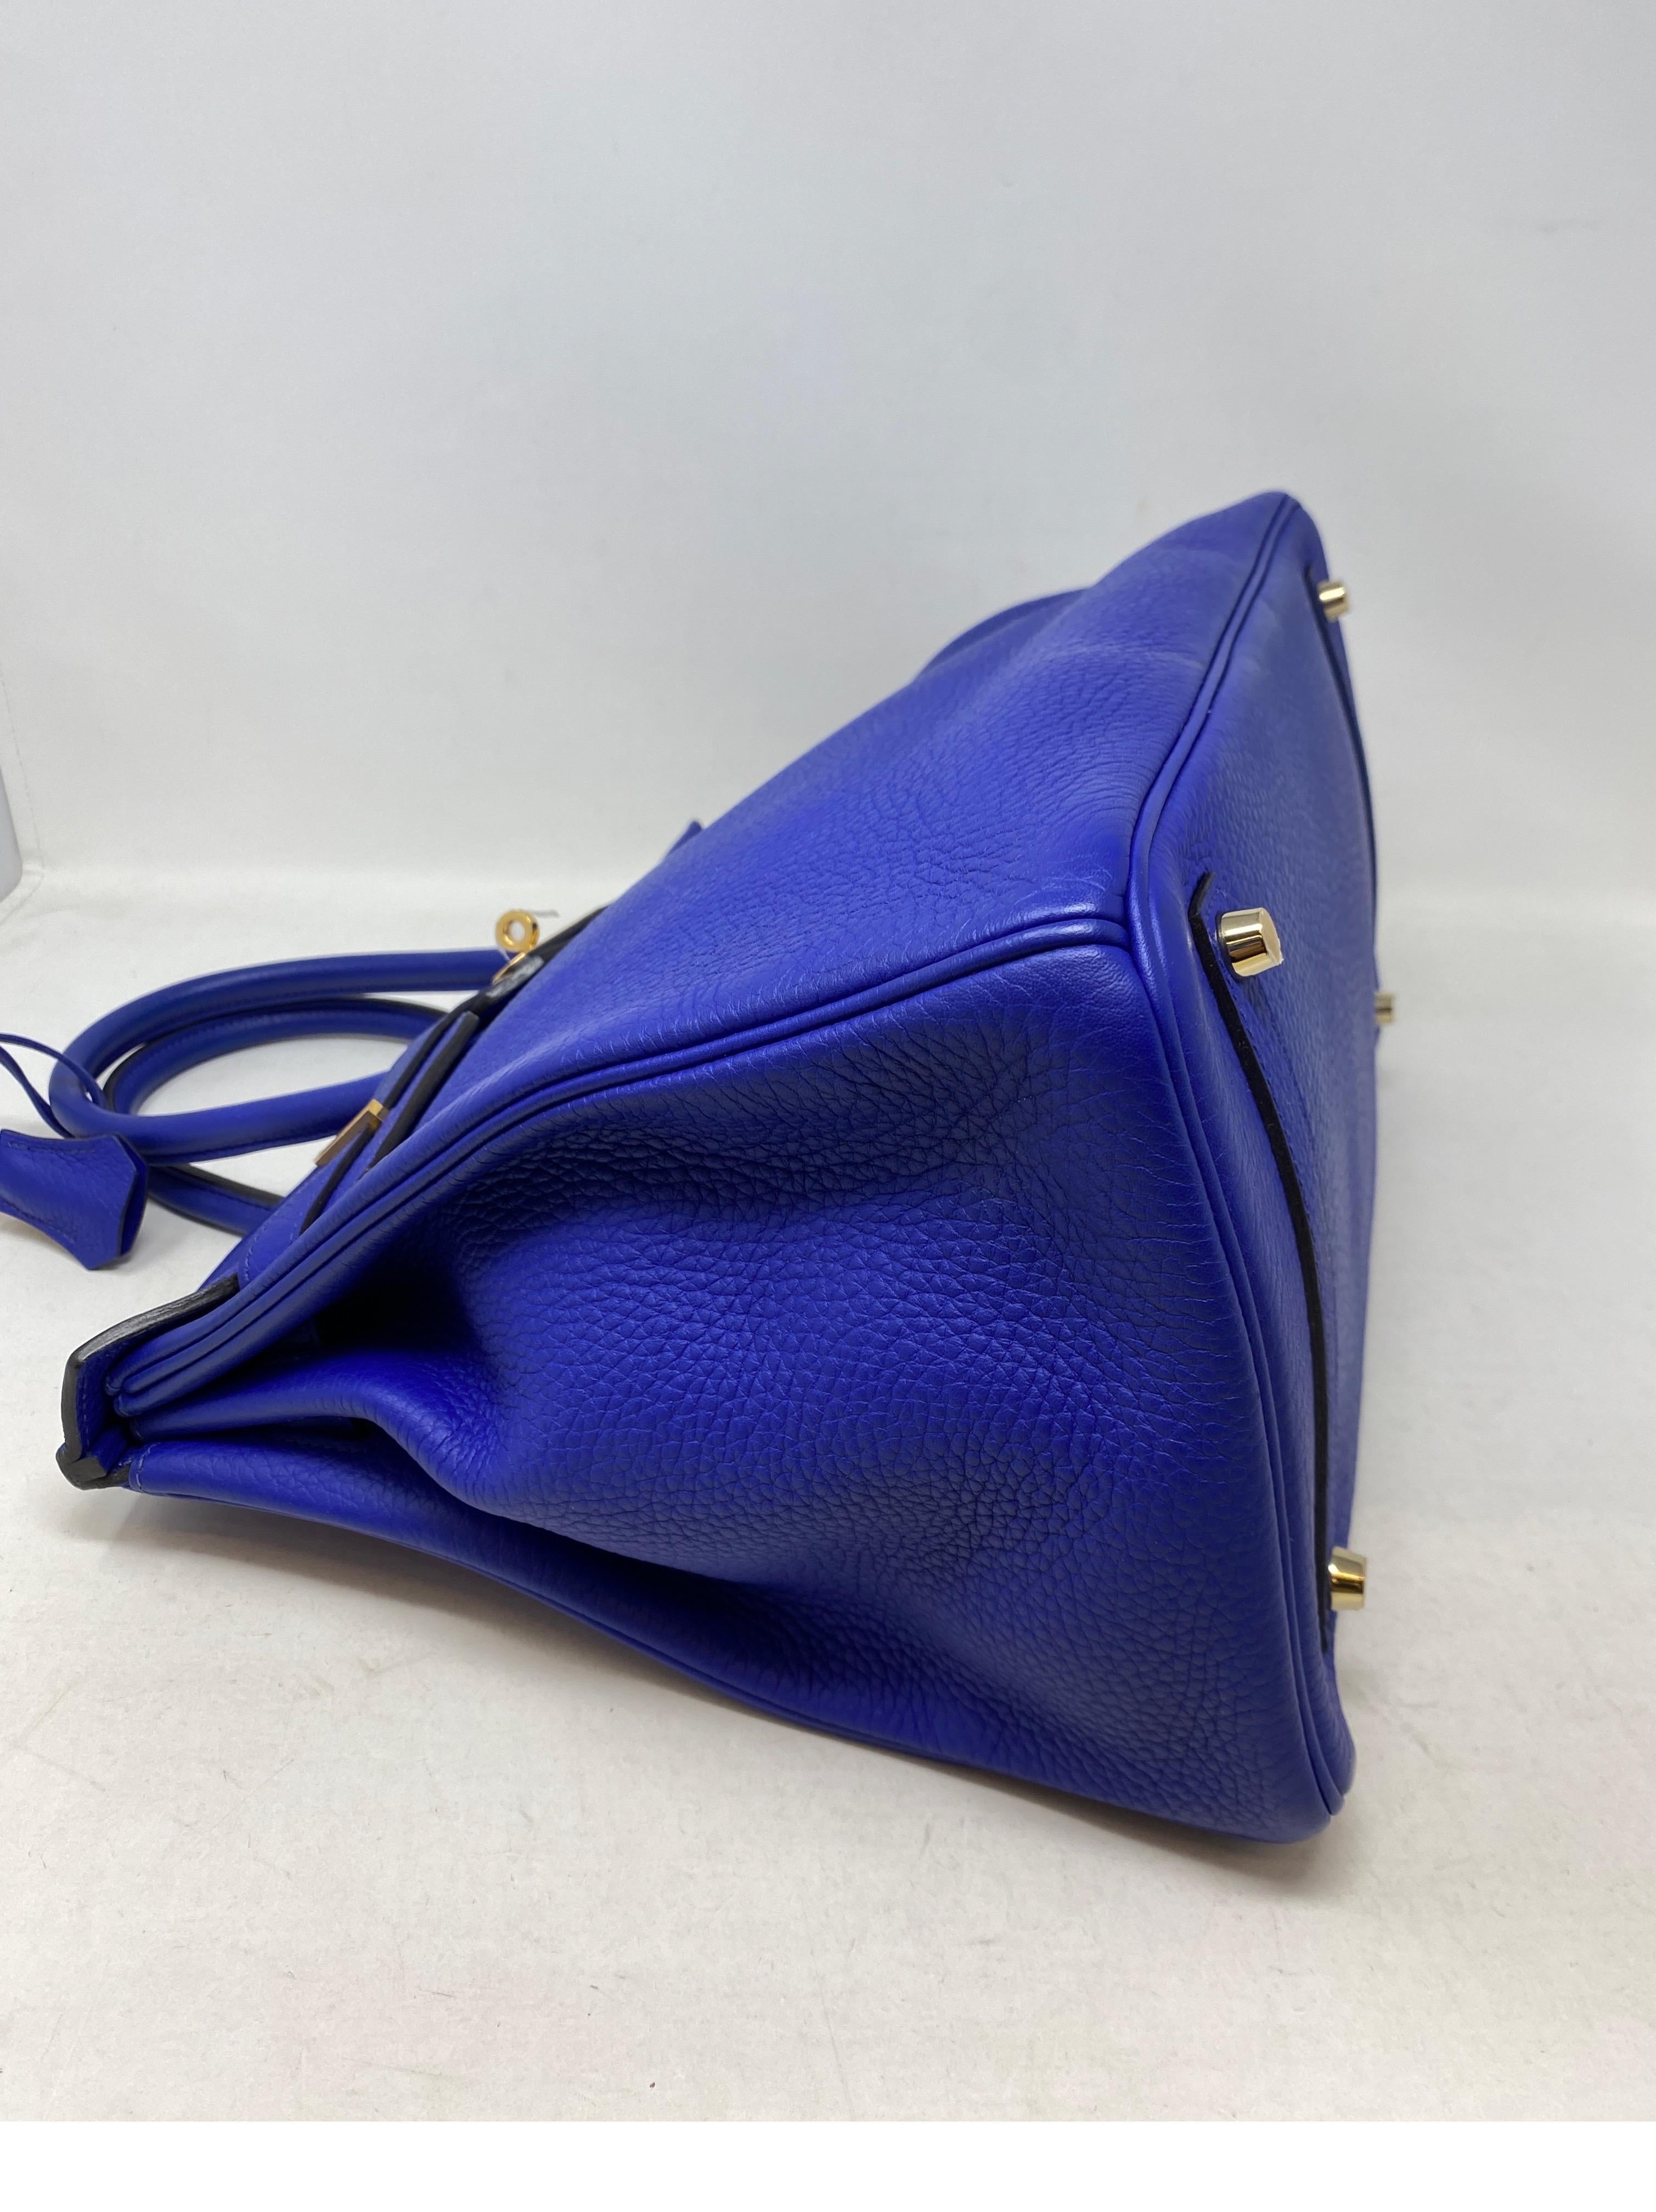 Women's or Men's Hermes Blue Electrique Birkin 35 Bag